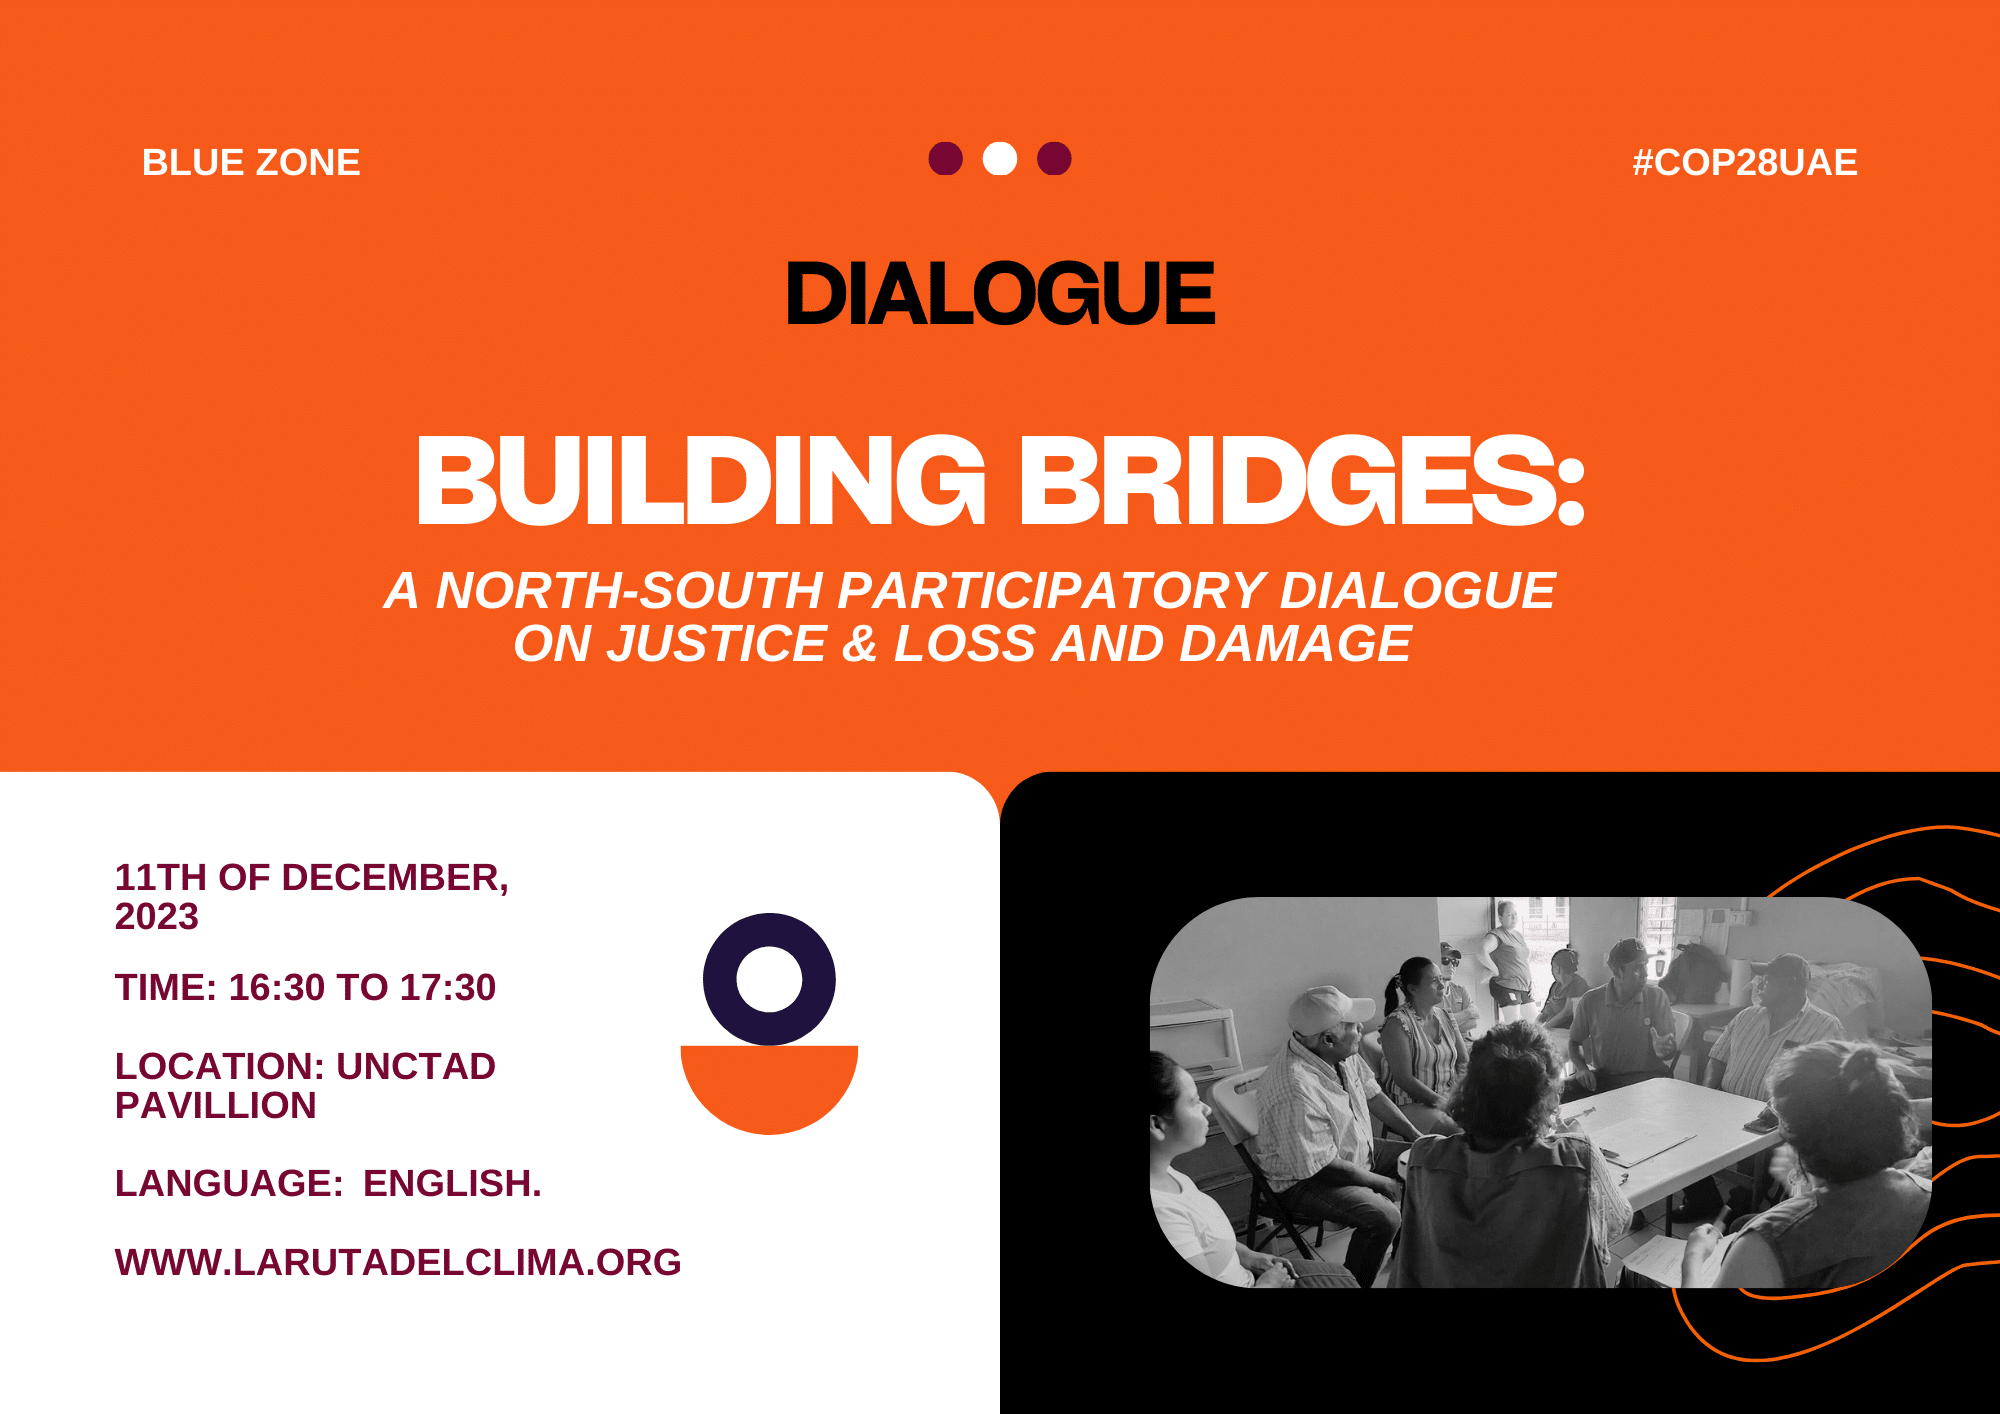 Evento COP28 – Building Bridges: North-South Participatory Dialogue on Justice & Loss and Damage